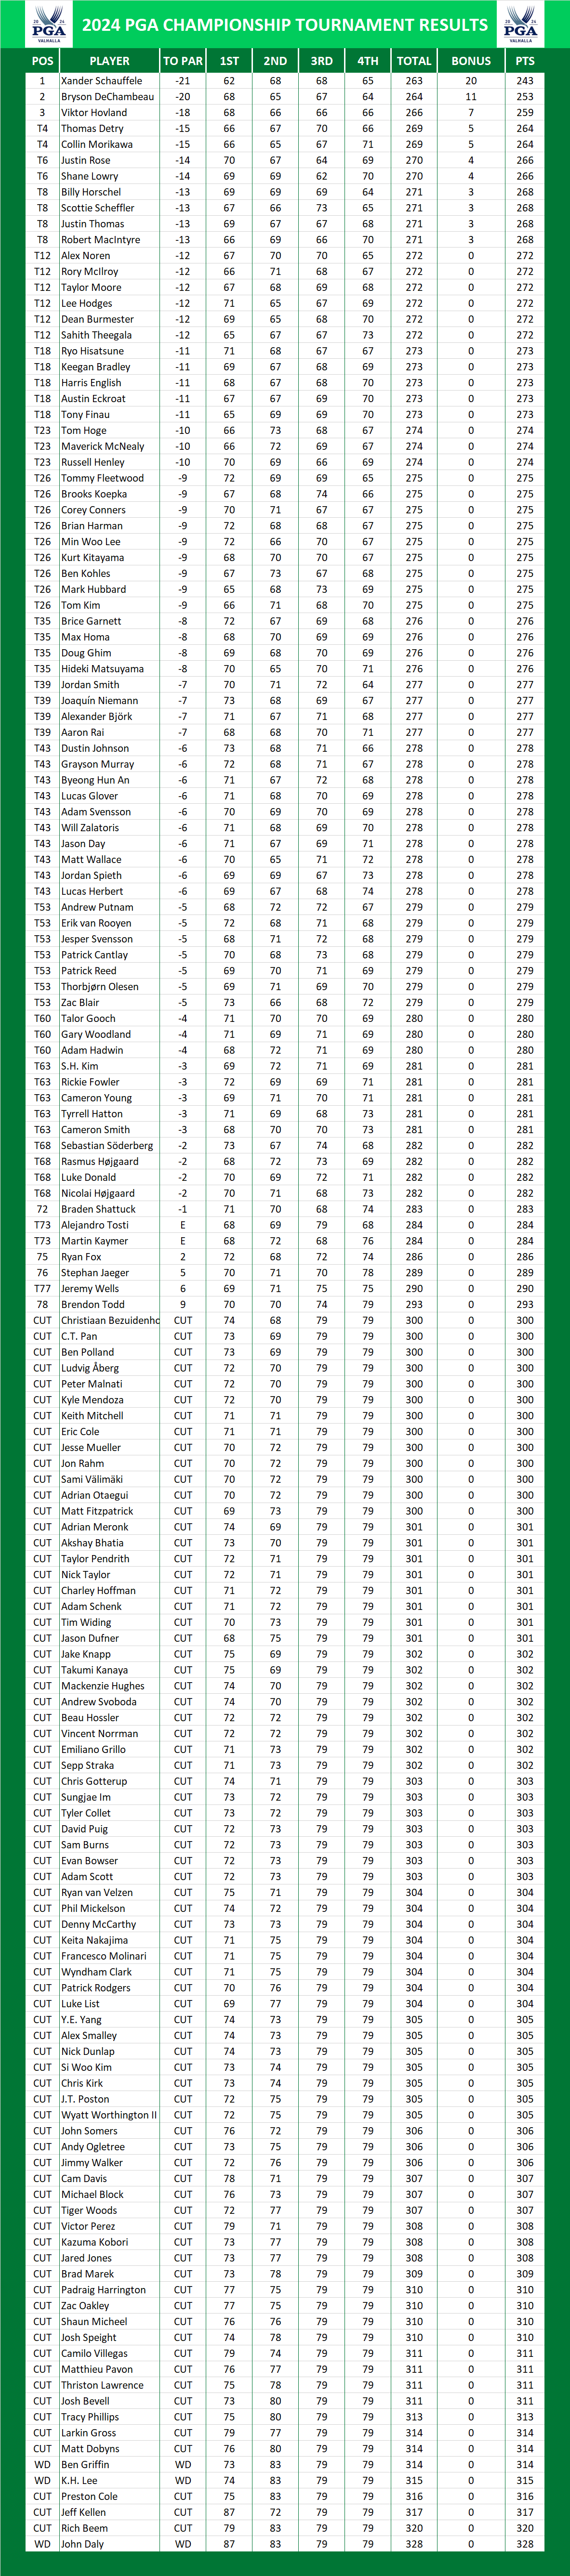 PGA Championship PGA Results